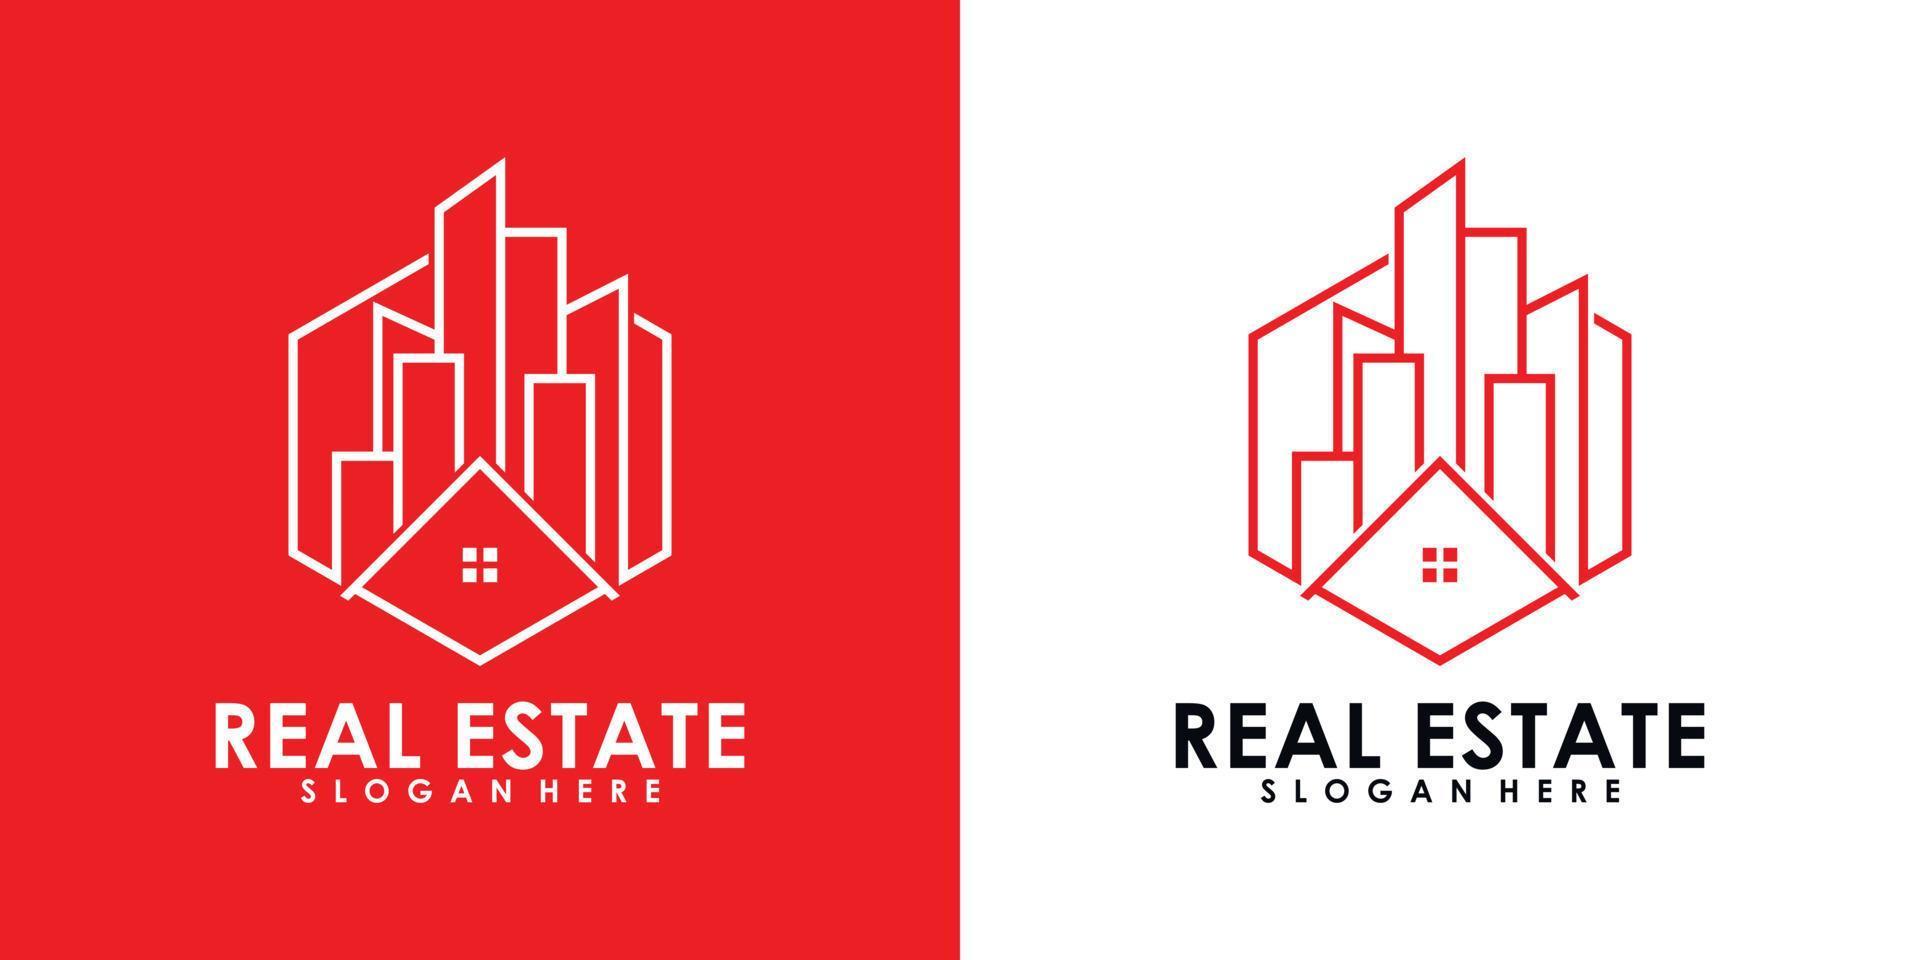 real estate logo design white moderen style Premium Vector